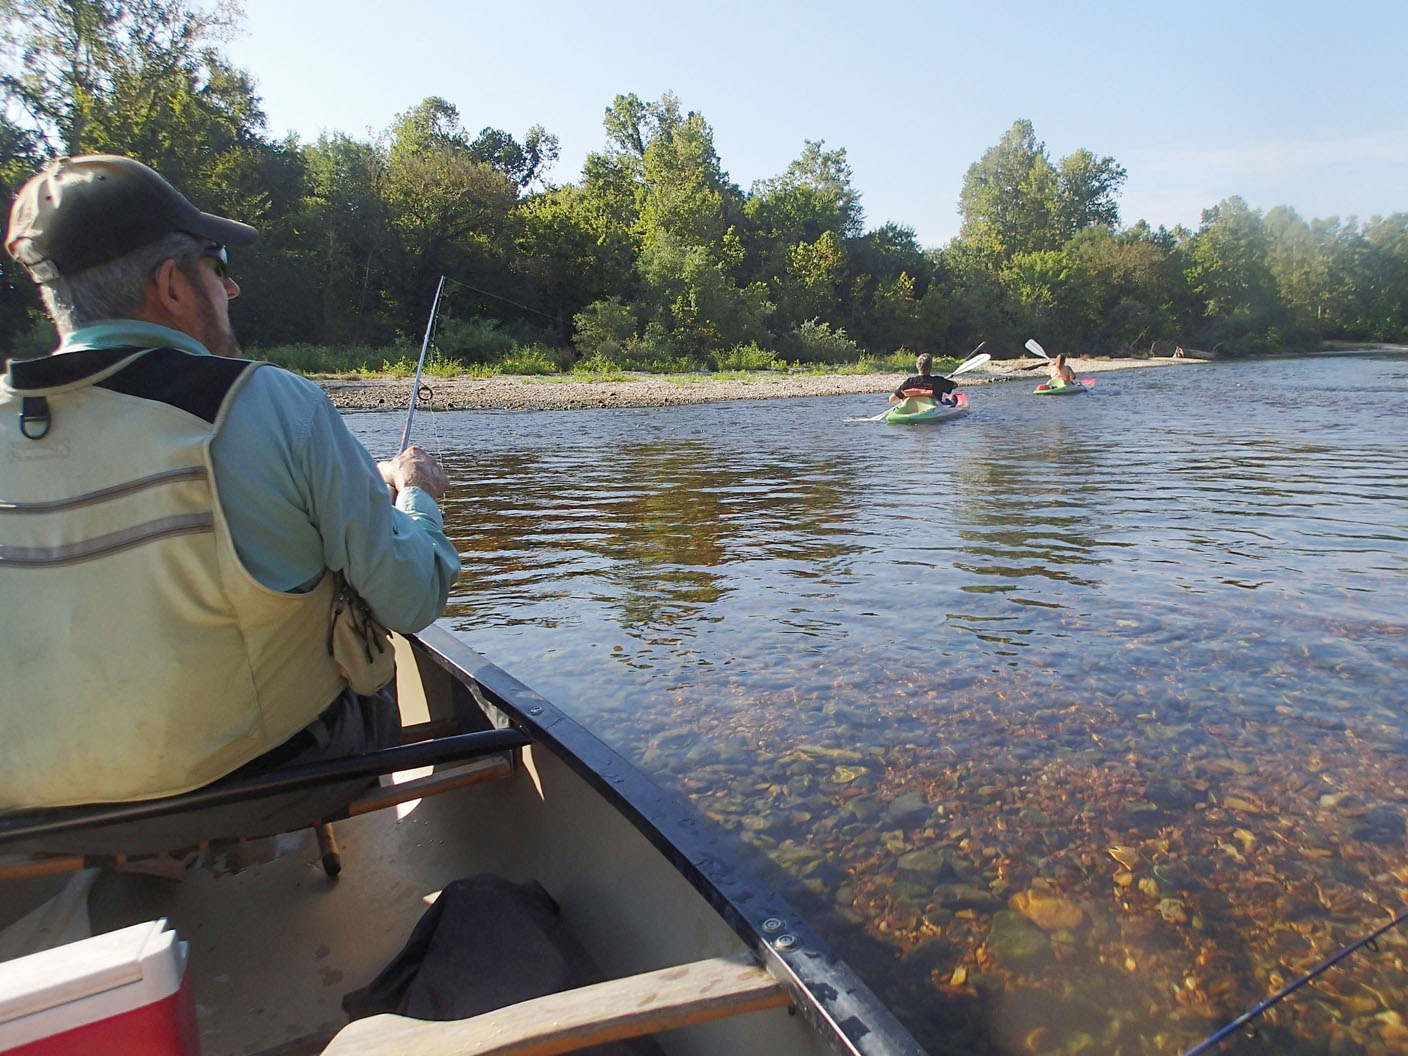 Floats & Camping – On the beautiful Elk River in Noel, Missouri!